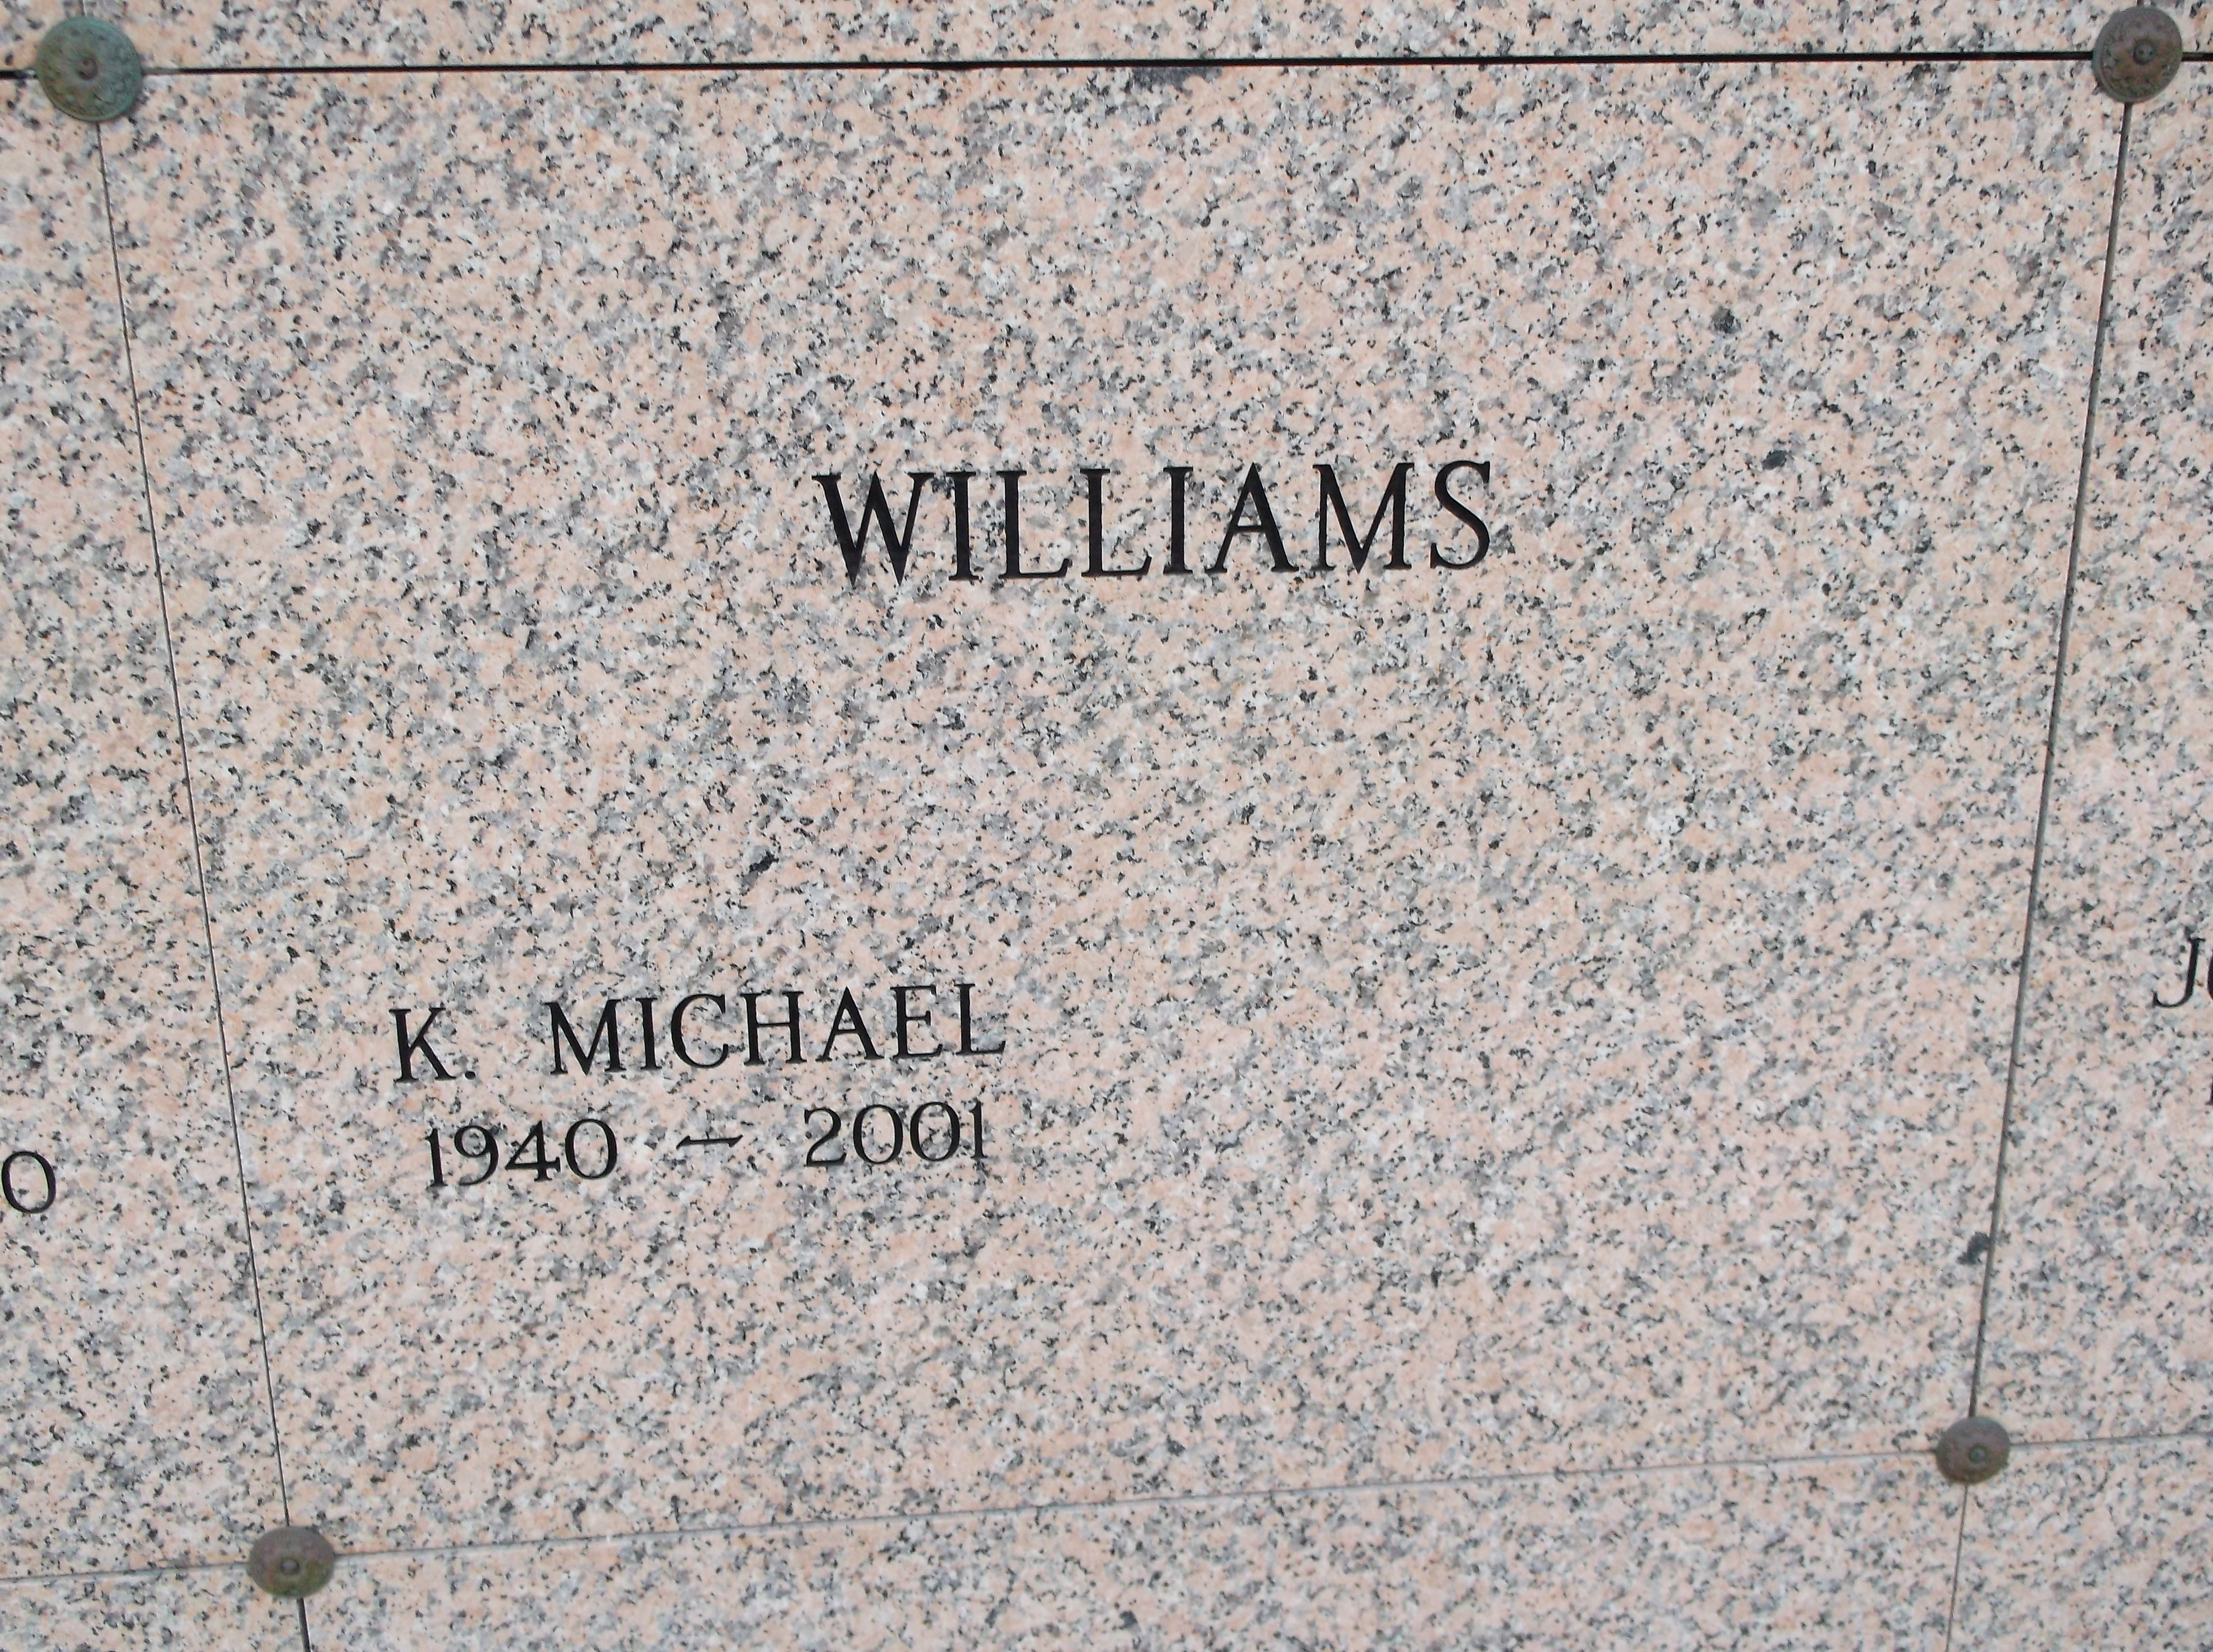 K Michael Williams